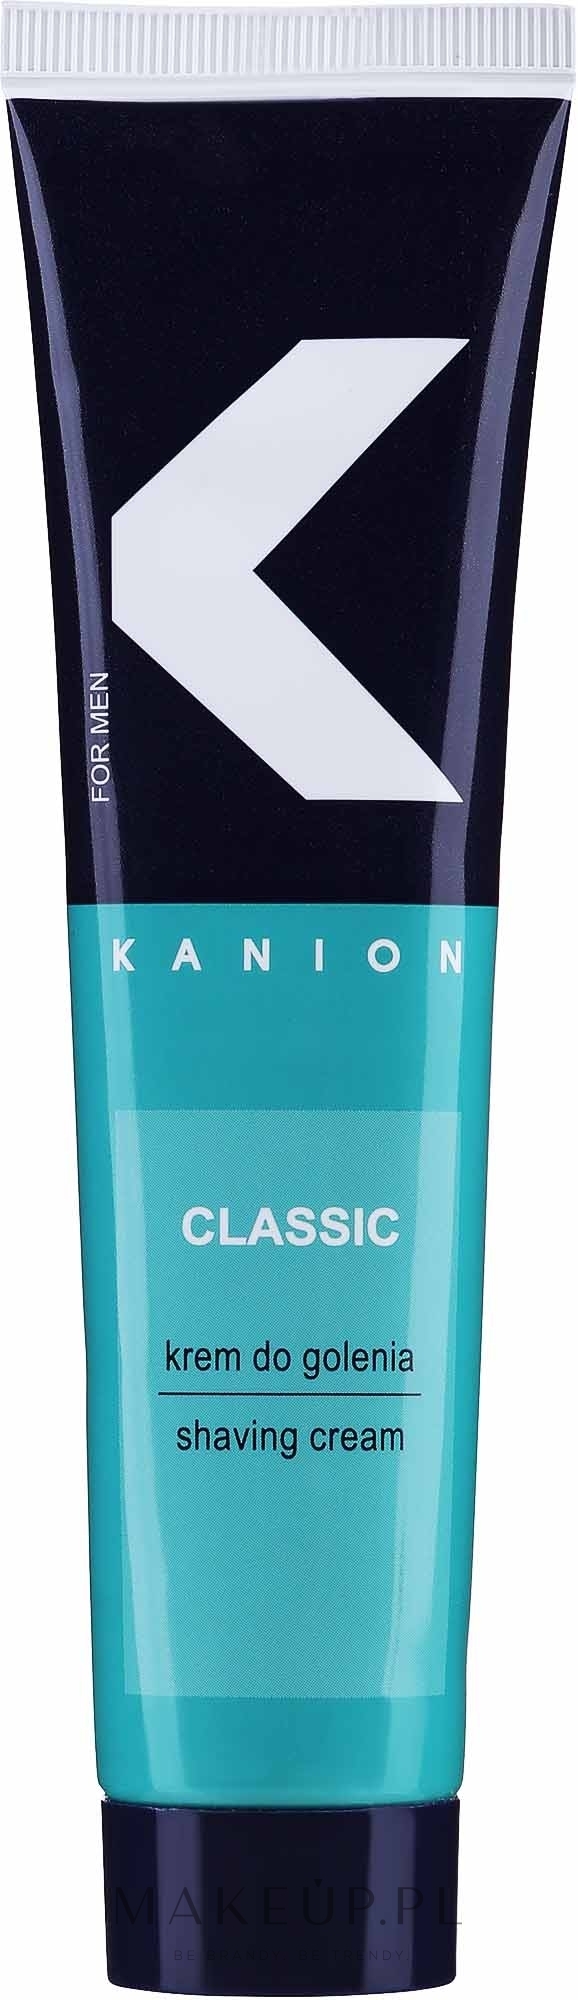 Krem do golenia - Kanion Classic Shaving Cream — Zdjęcie 75 ml